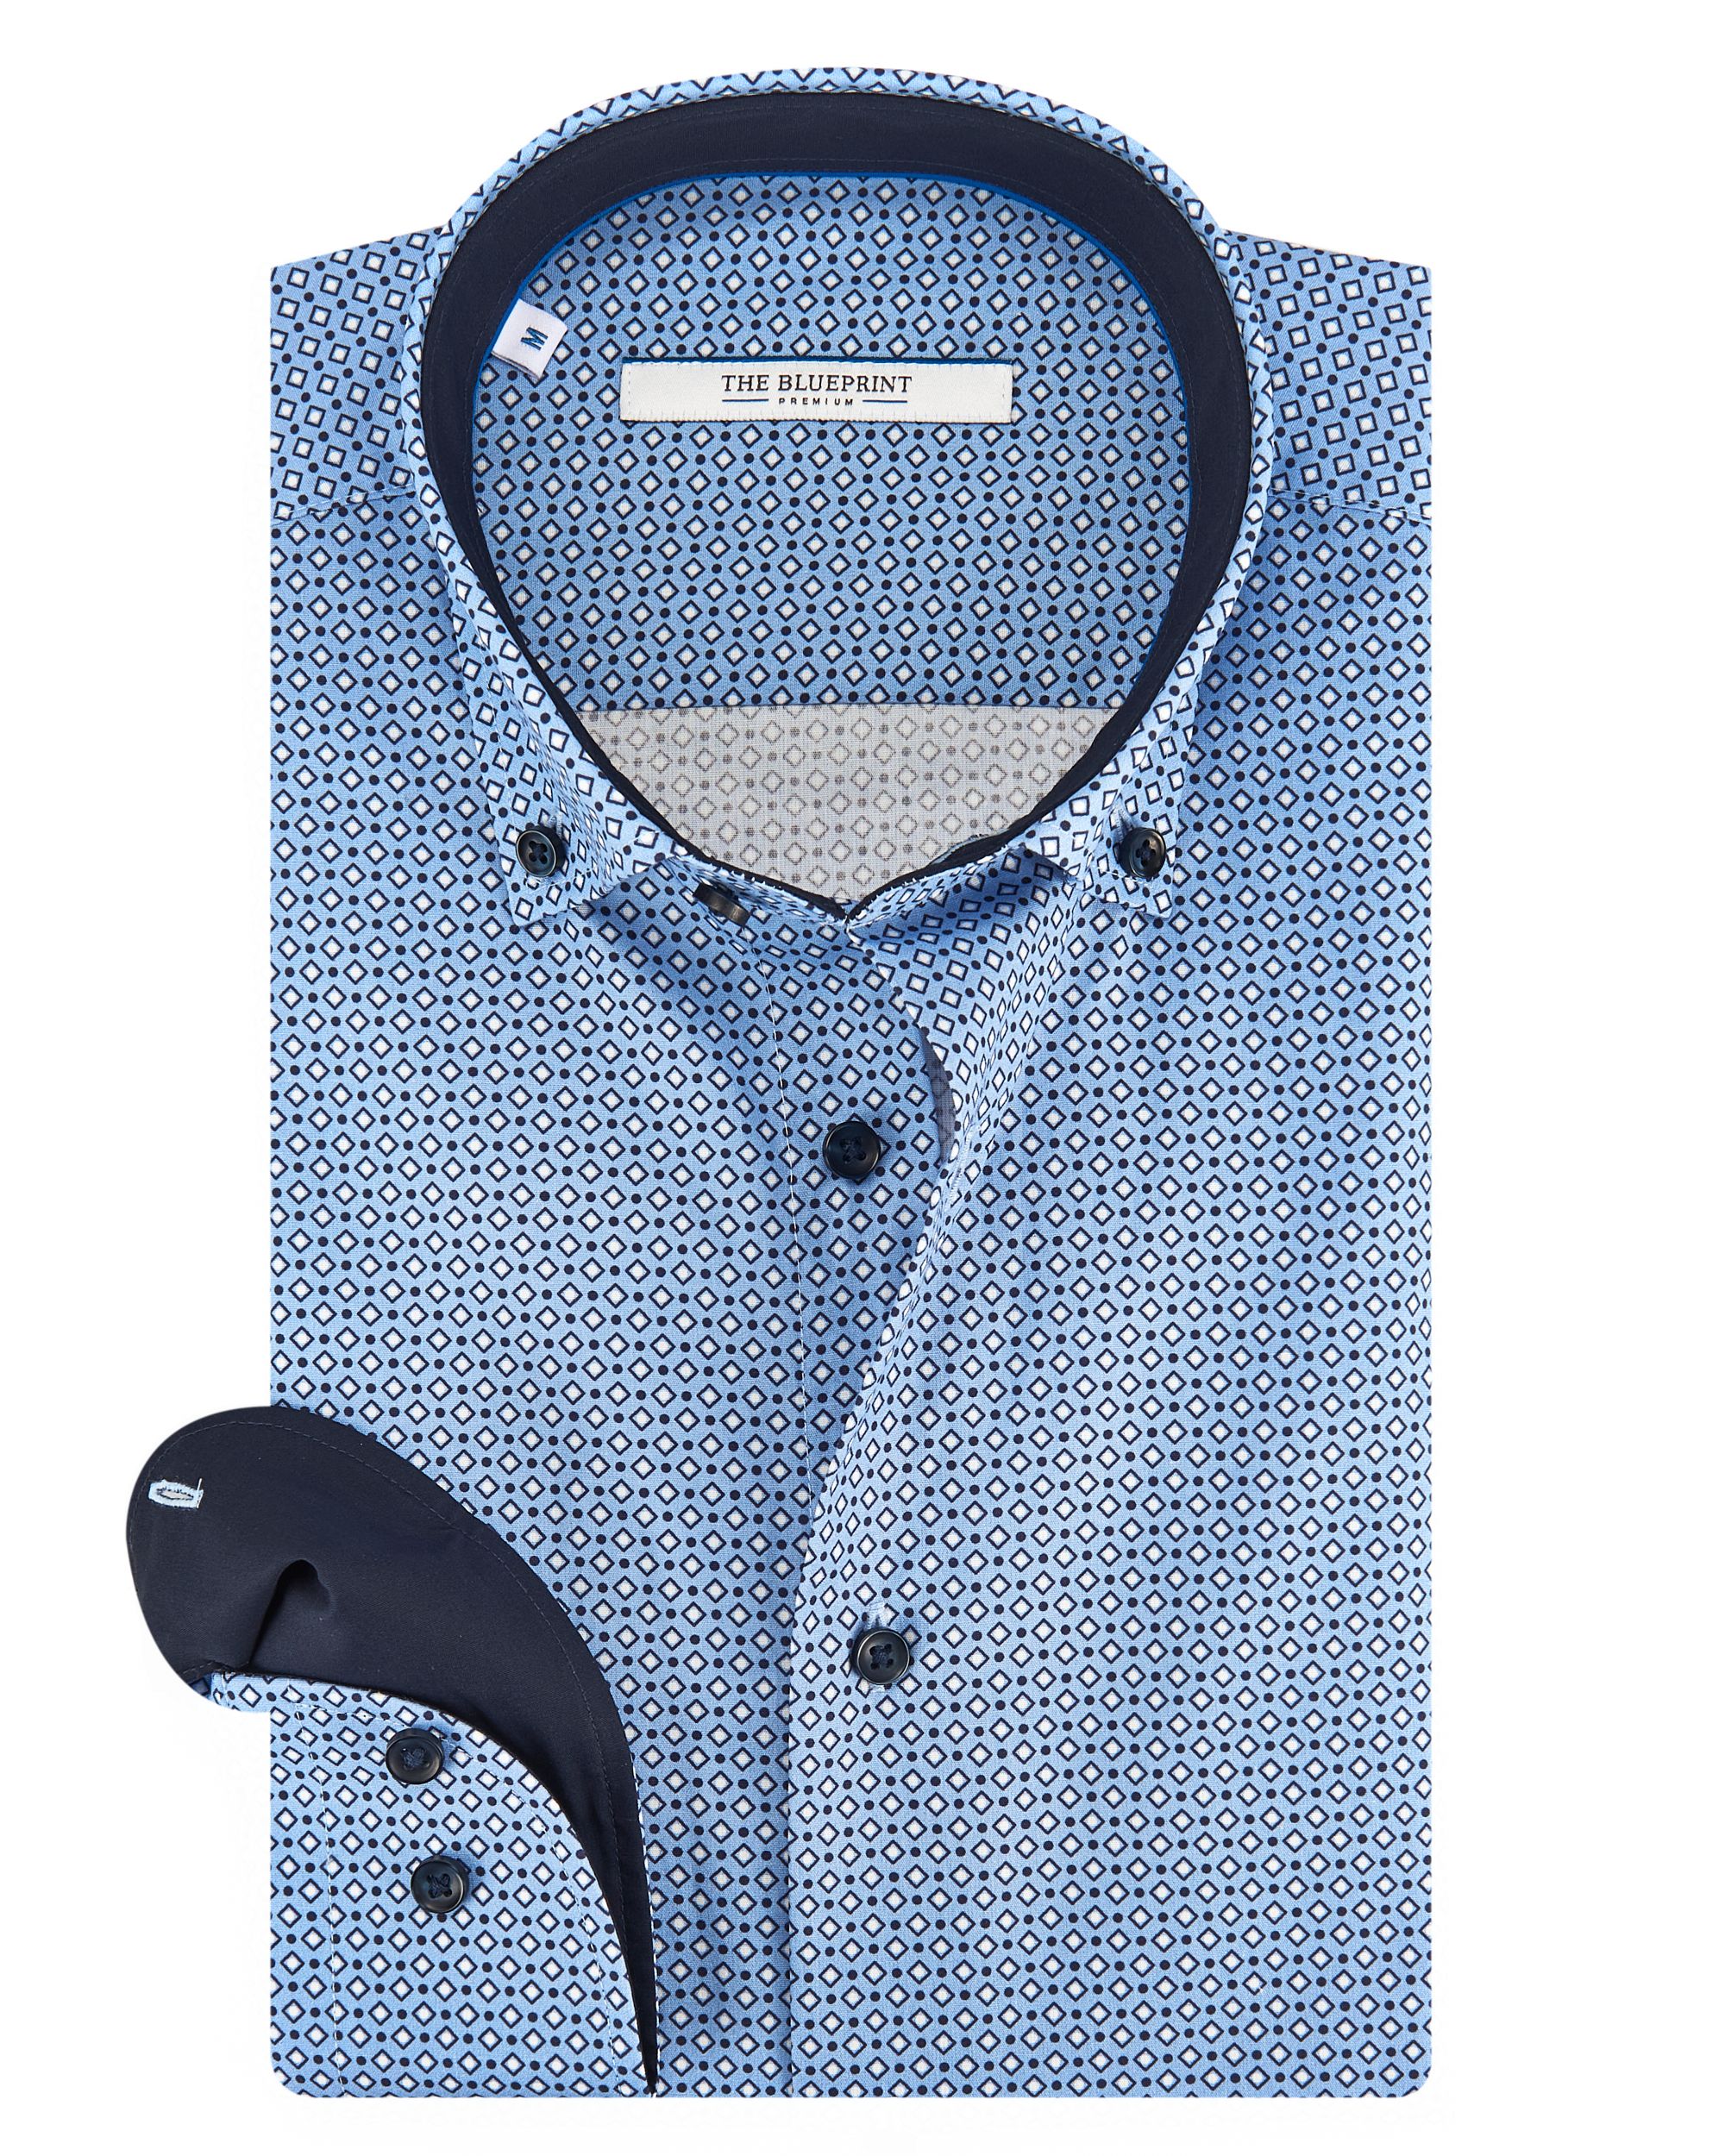 The BLUEPRINT Premium Casual Overhemd LM Lichtblauw dessin 082213-001-L